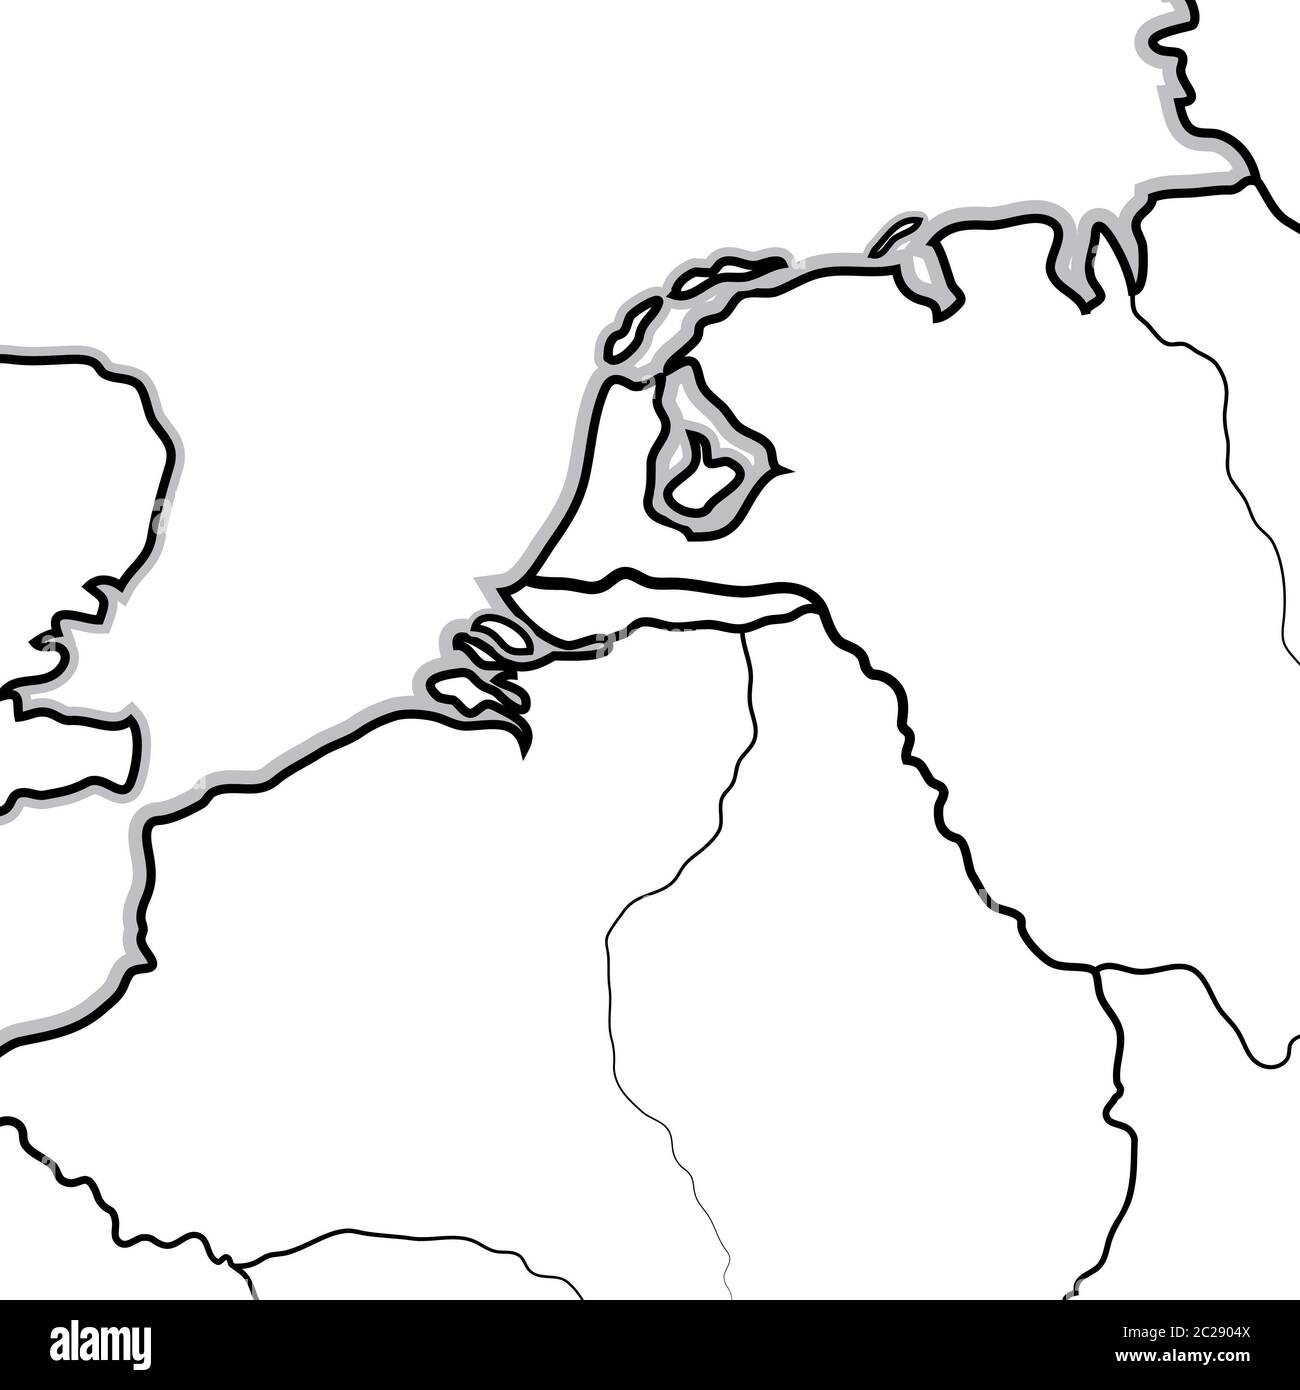 Karte der Niederlande: Niederlande, Belgien, Luxemburg (Benelux). Geografische Karte. Stockfoto